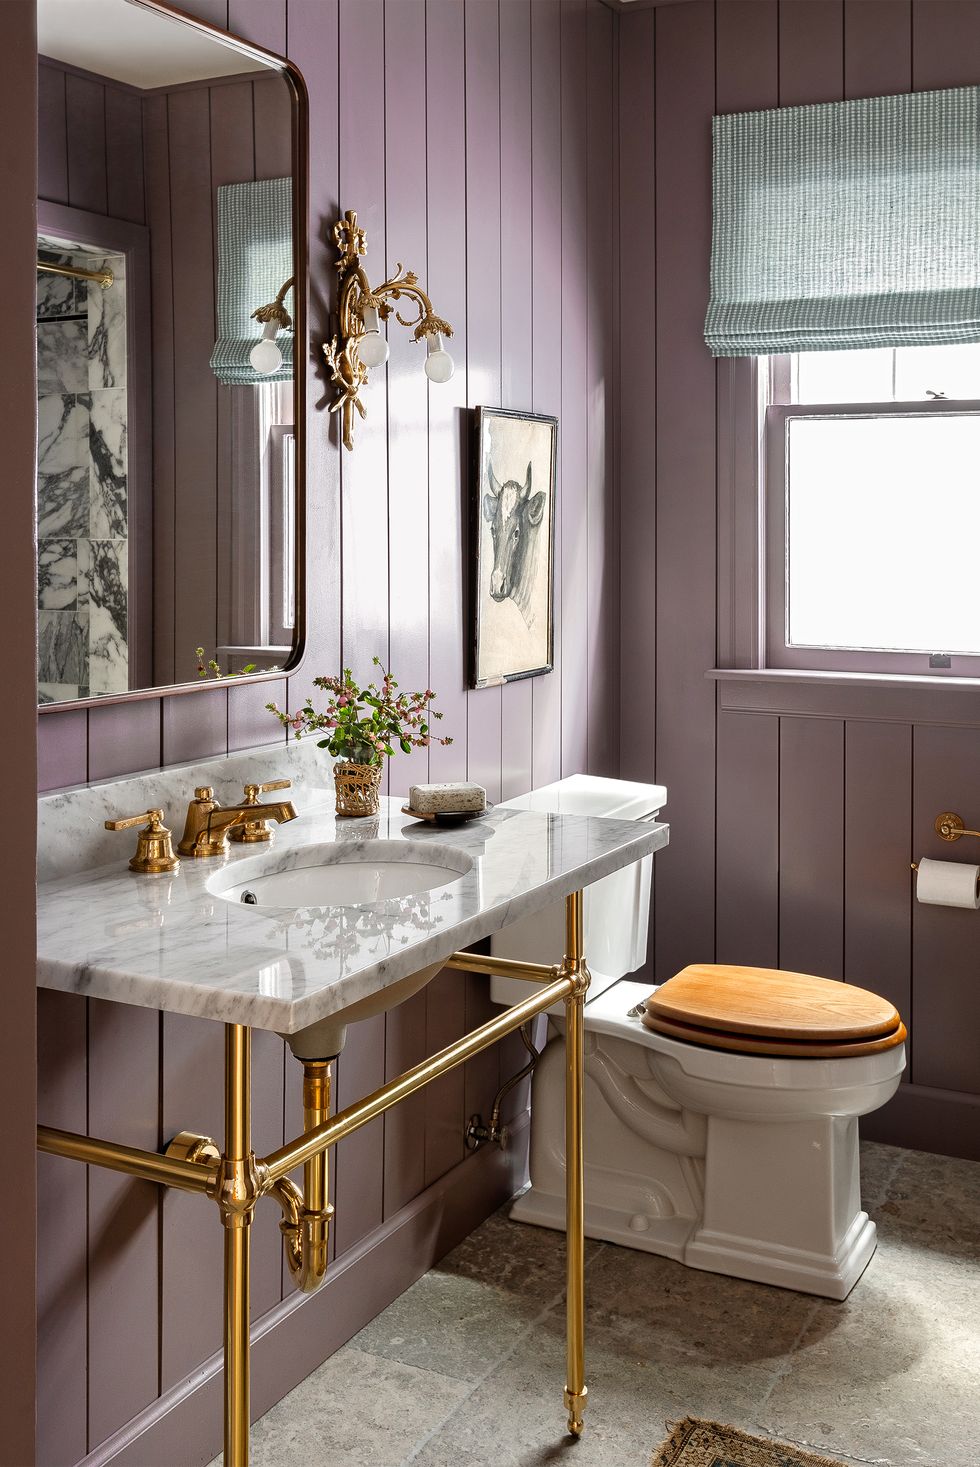 Bathroom Decor Ideas: My Favorite Stylish Options! - Driven by Decor